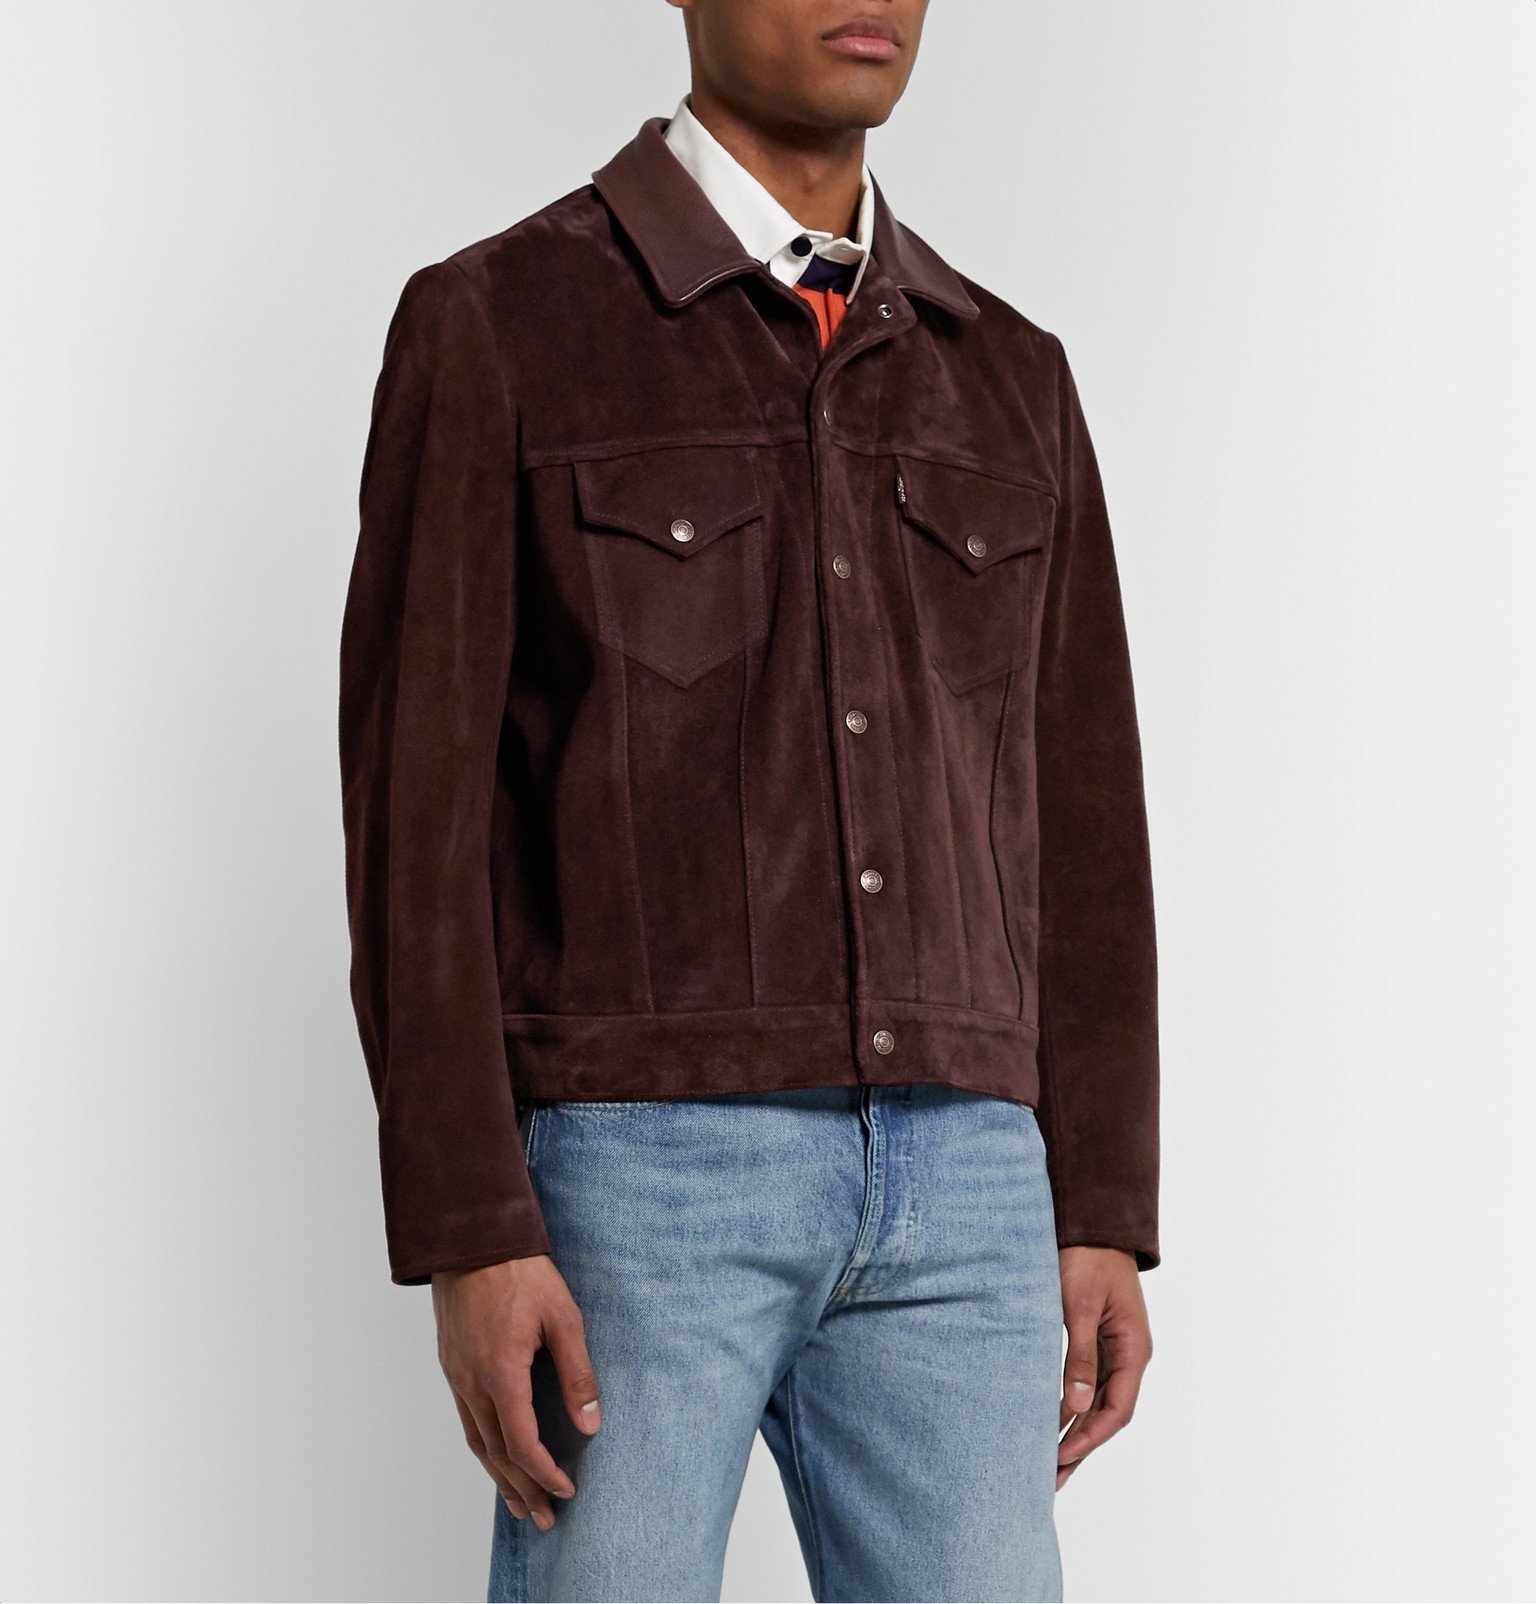 Levi's Vintage Clothing - Leather-Trimmed Suede Trucker Jacket - Brown ...